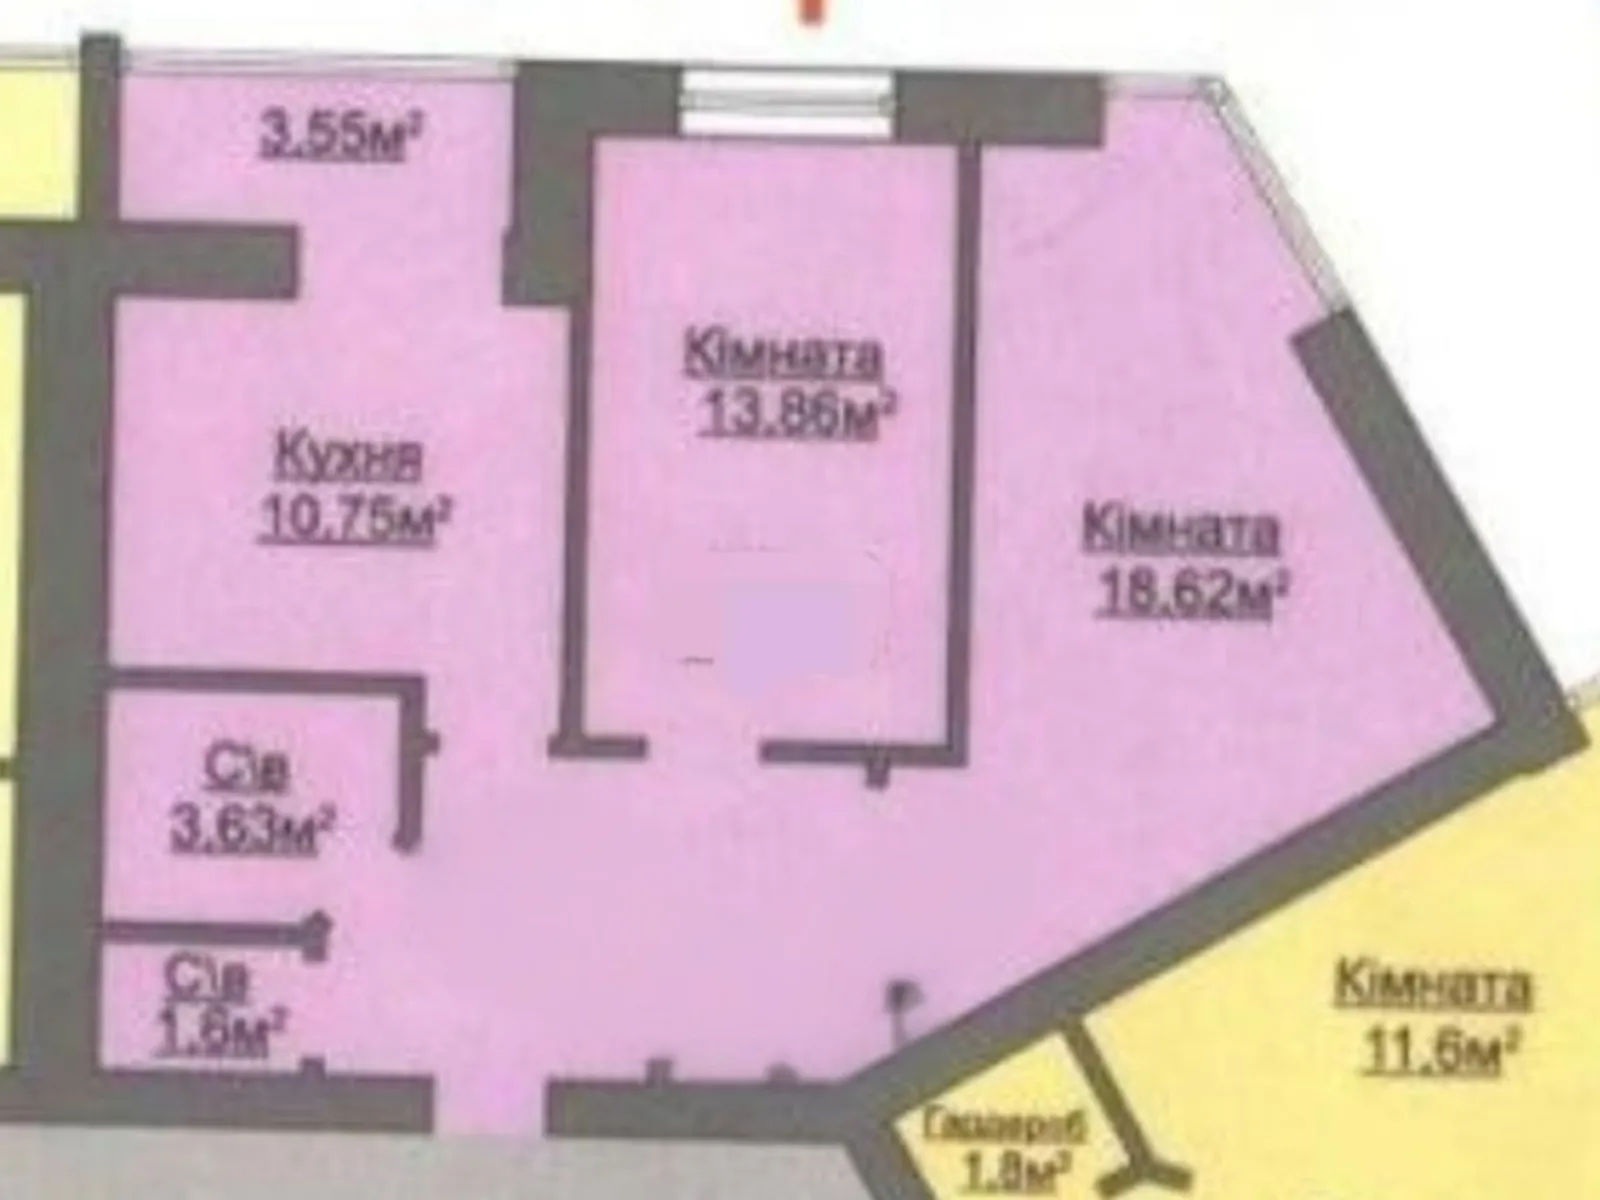 2-кімнатна квартира 61.9 кв. м у Луцьку - фото 3